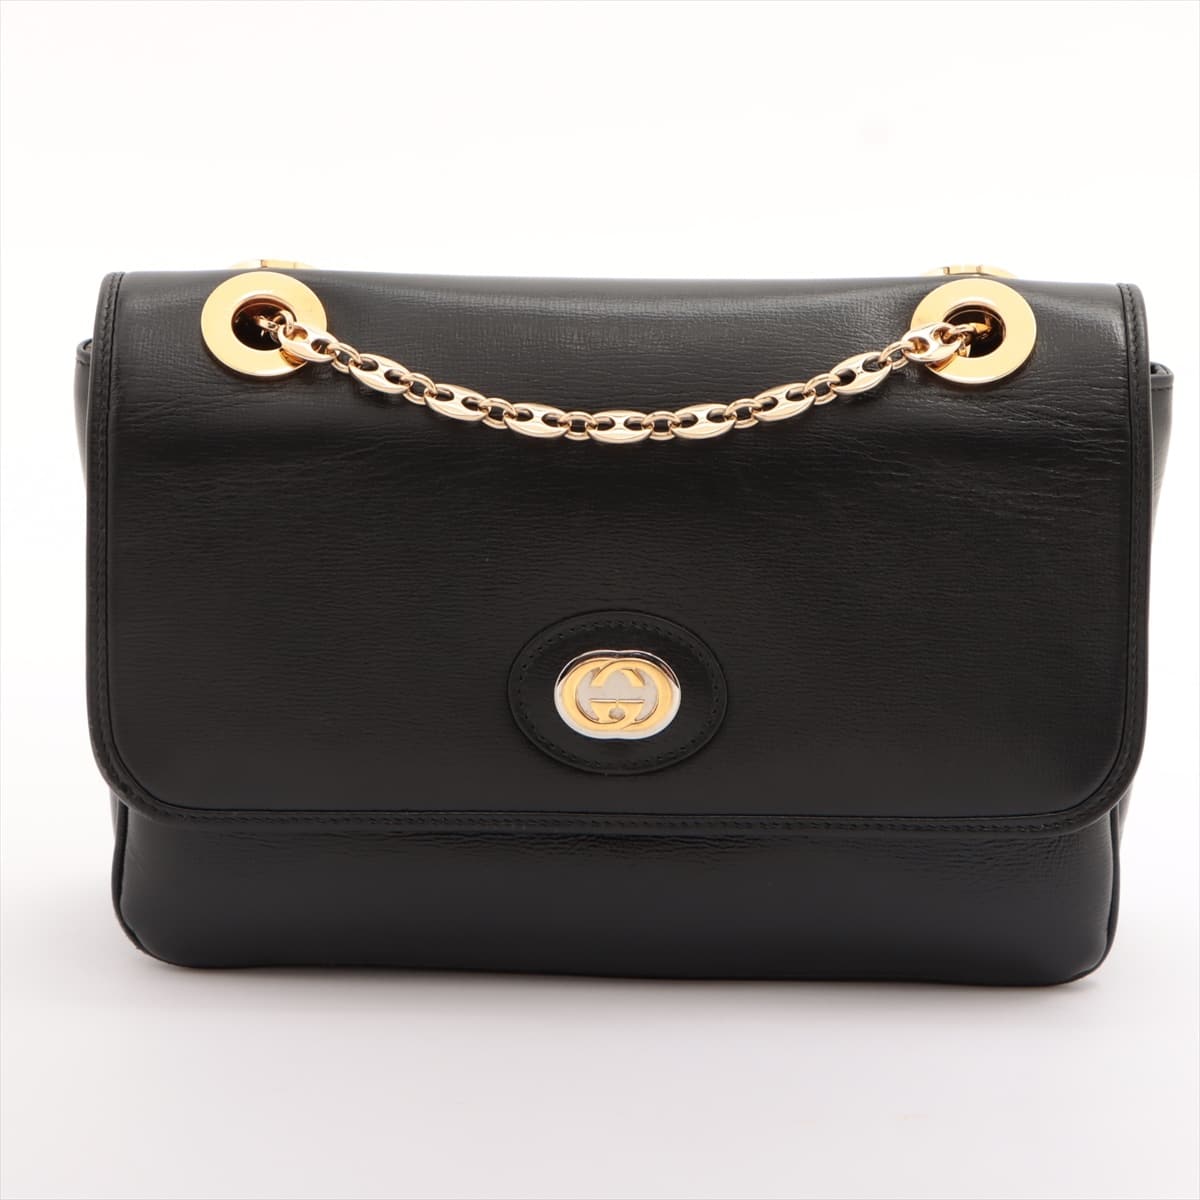 Gucci Marina Leather Chain shoulder bag Black 576421